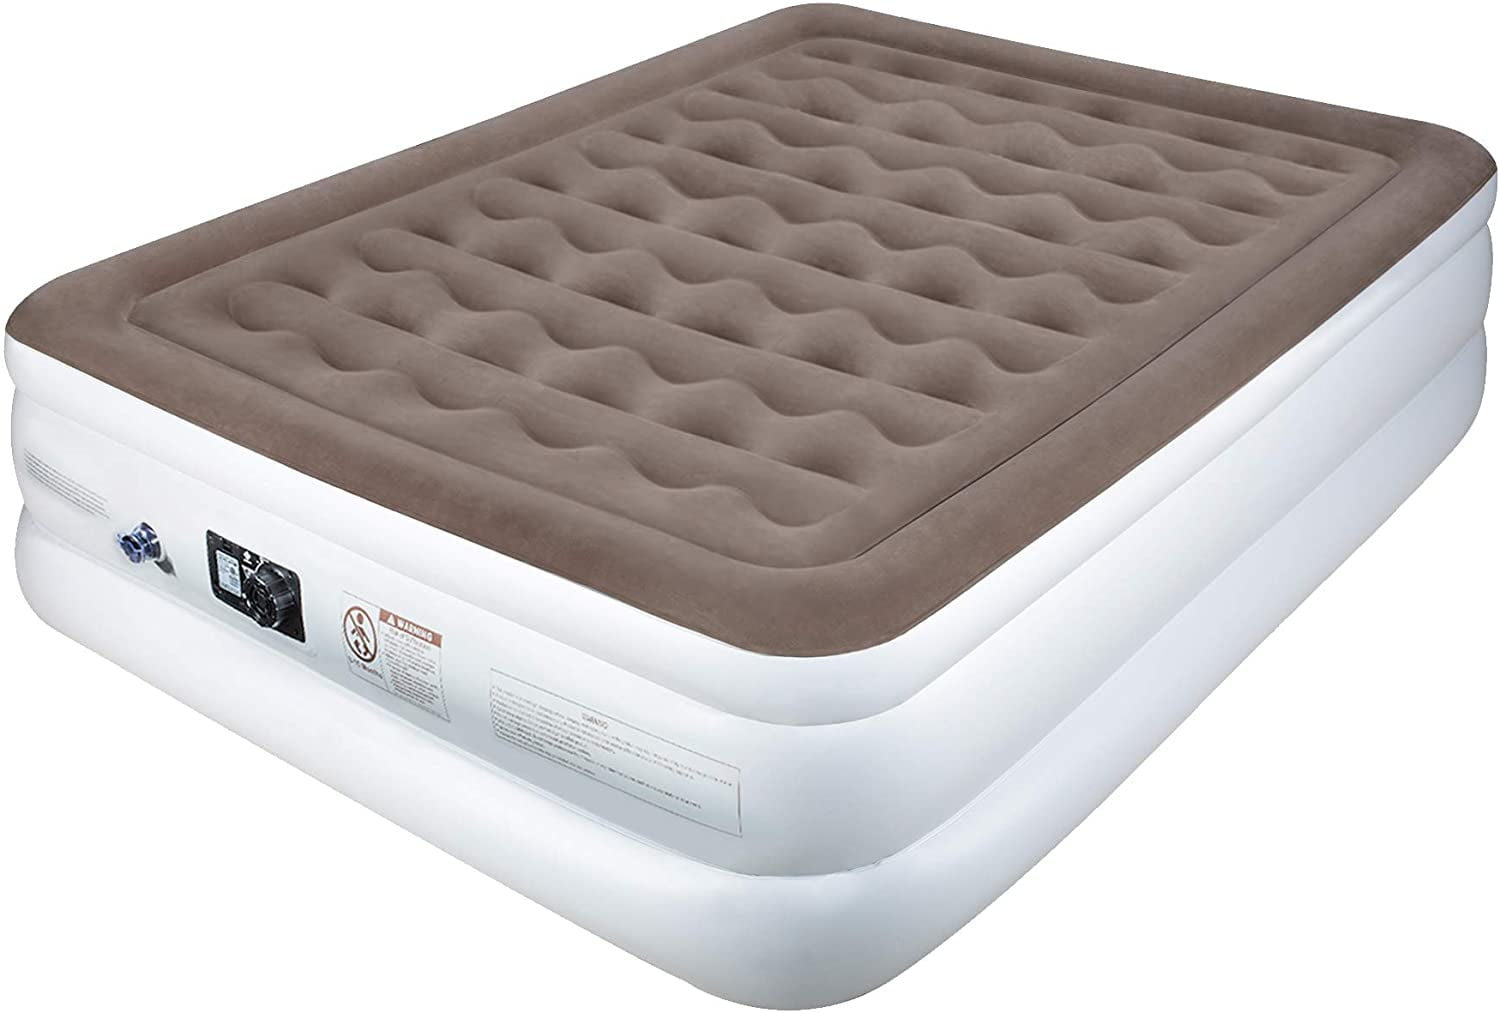 large air mattress amazon